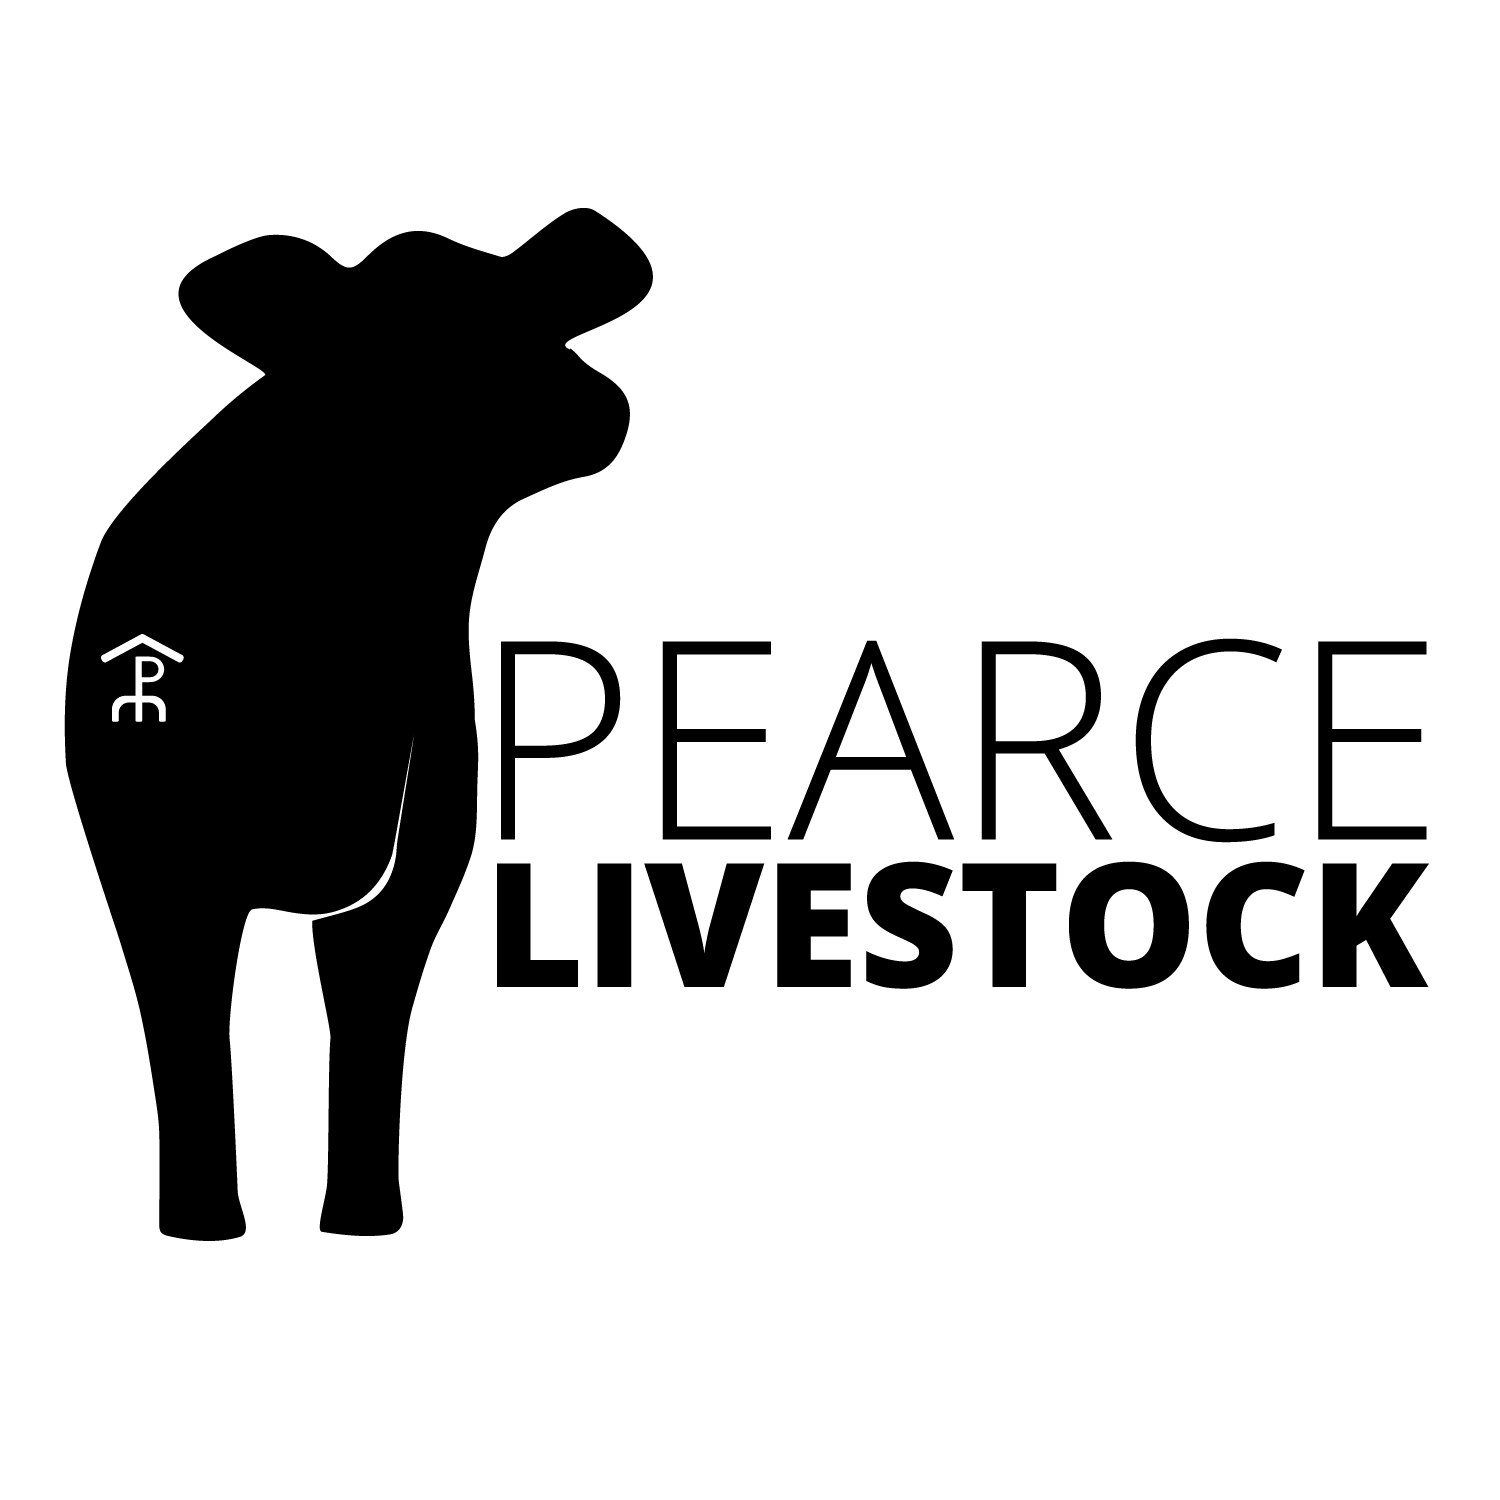 Pearce Livestock